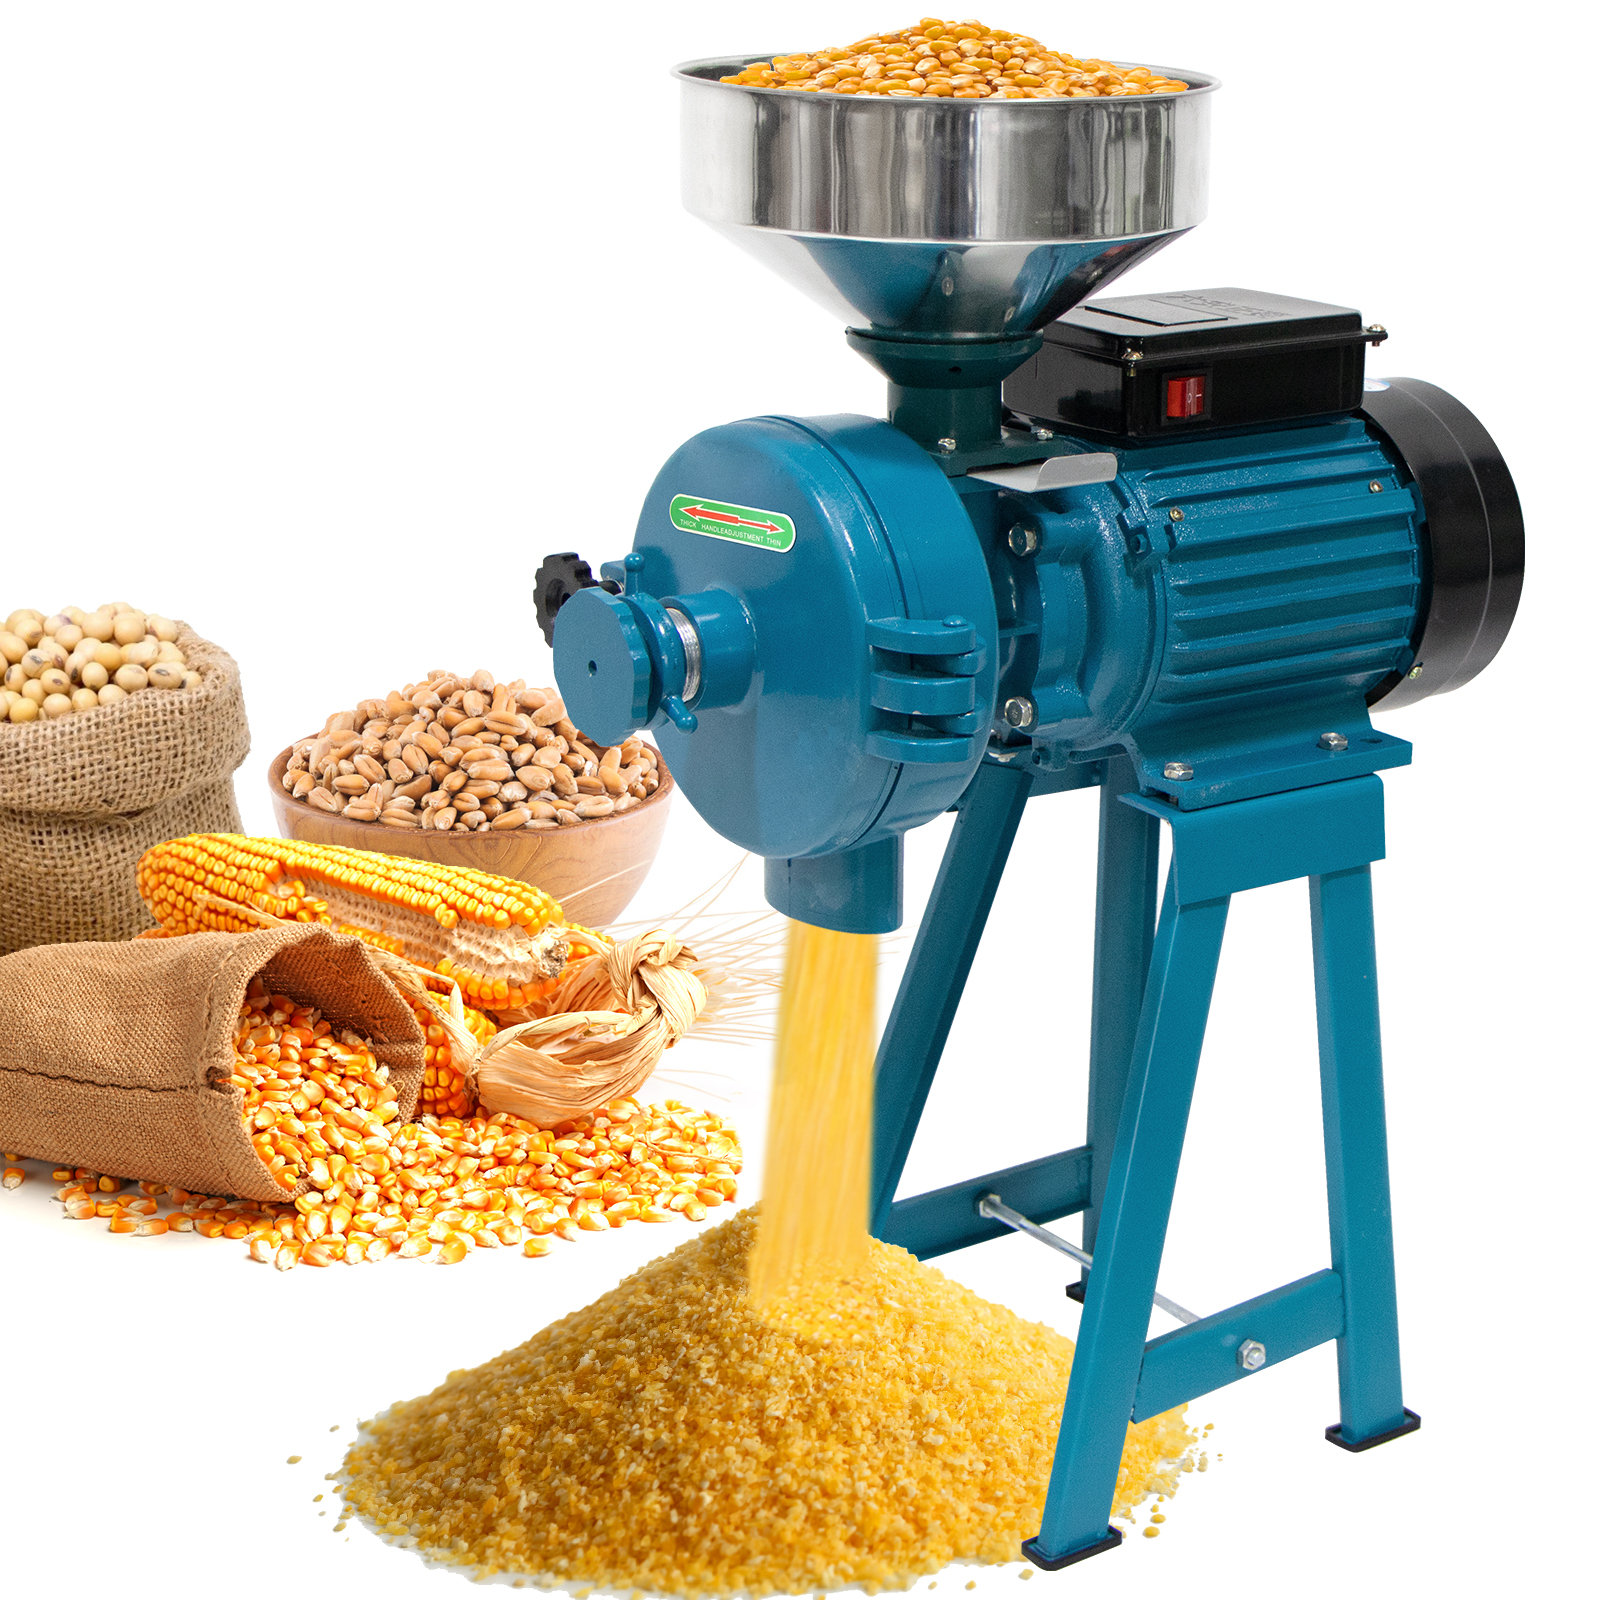  Family Grain Mill Grain Grinder Attachment for Saving